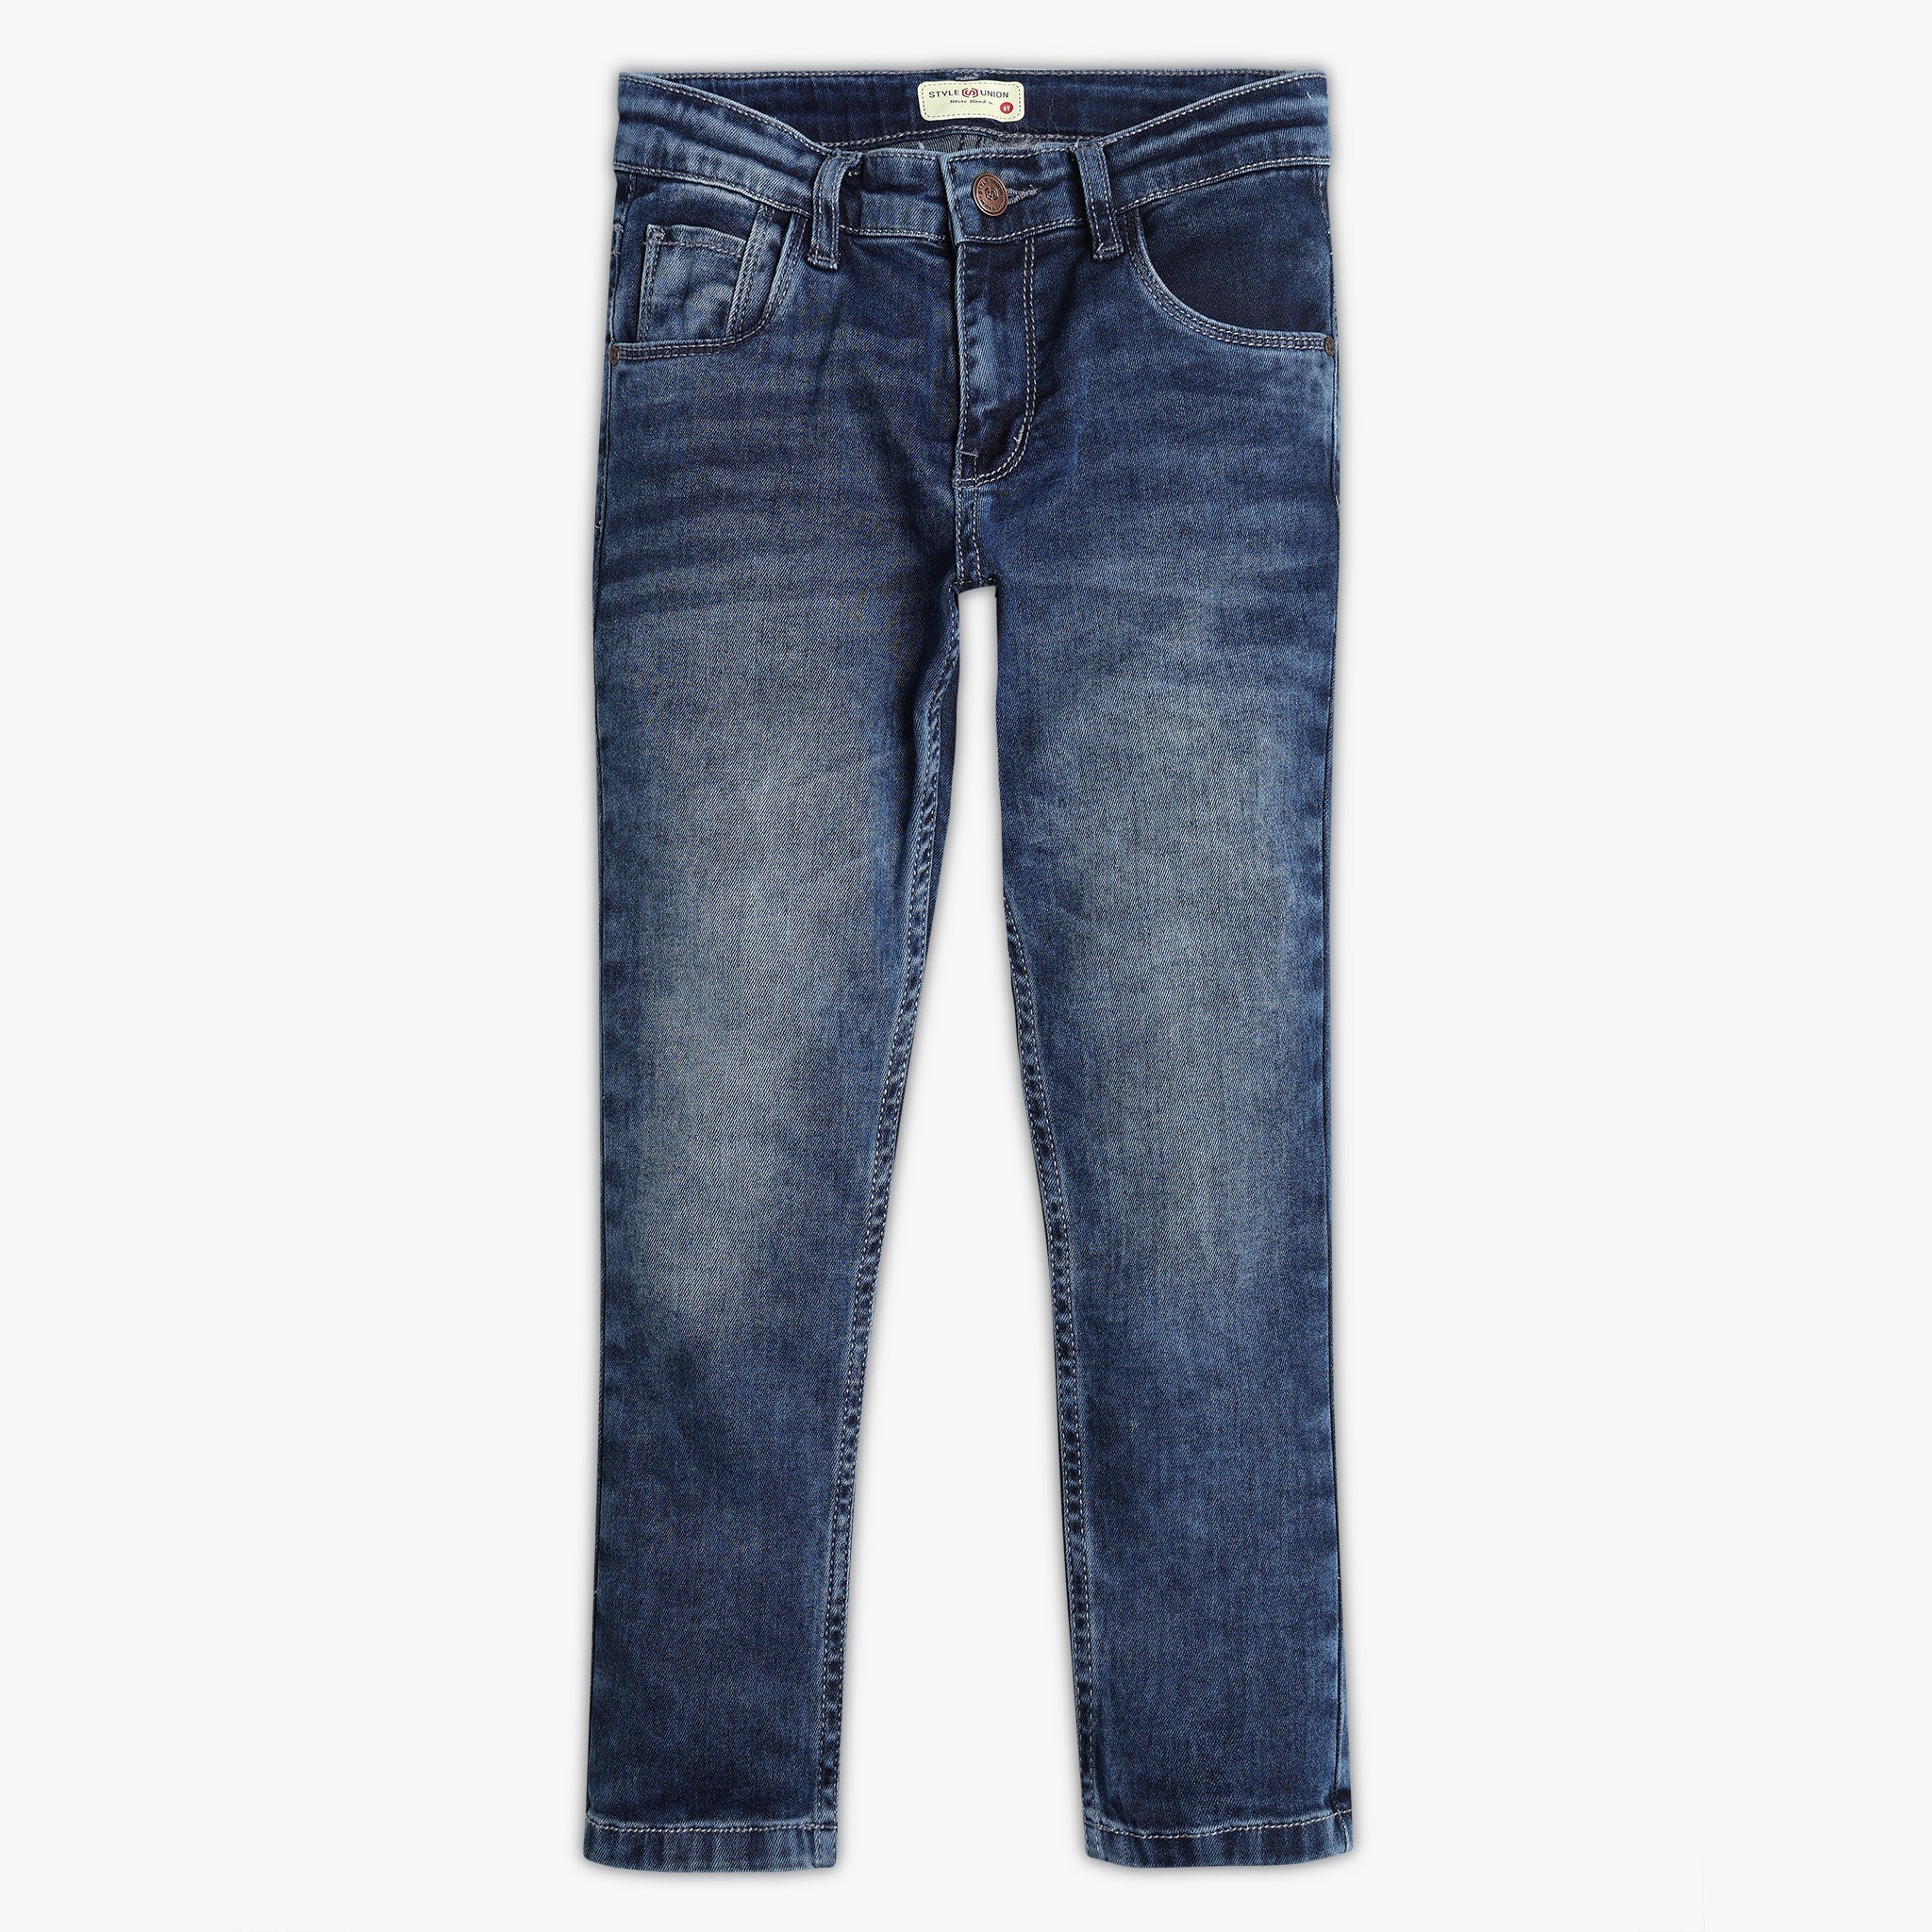 Kids Jeans Boys Stretch Ribbed Denim Skinny School Pants Trousers Age 7-15  Years | eBay